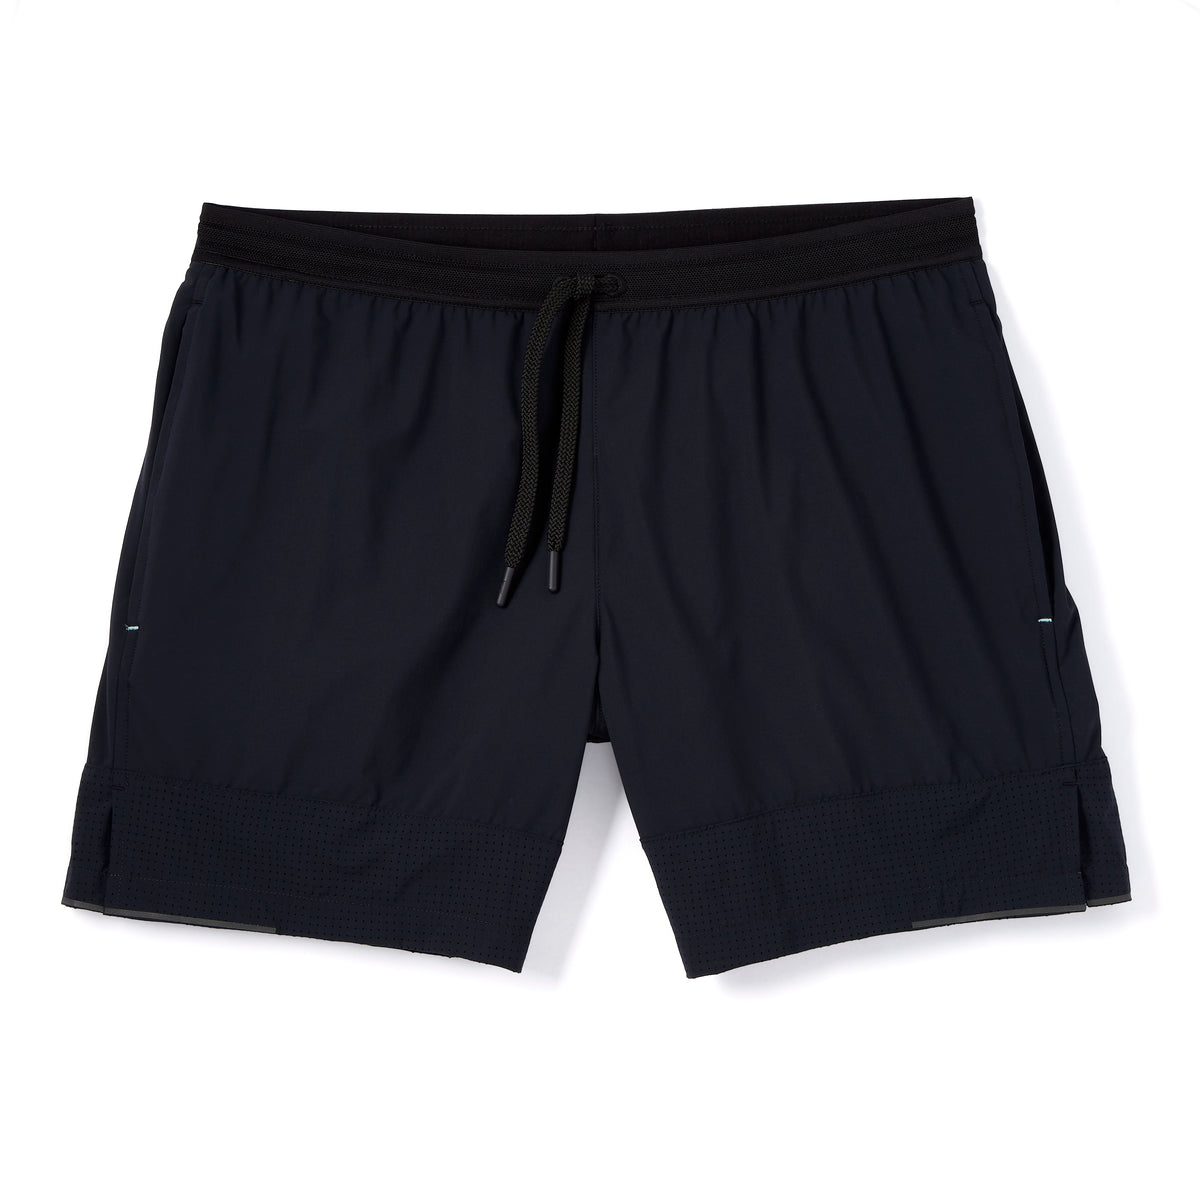 Switchback Short in Black | Men's Running Shorts | Myles Apparel ...